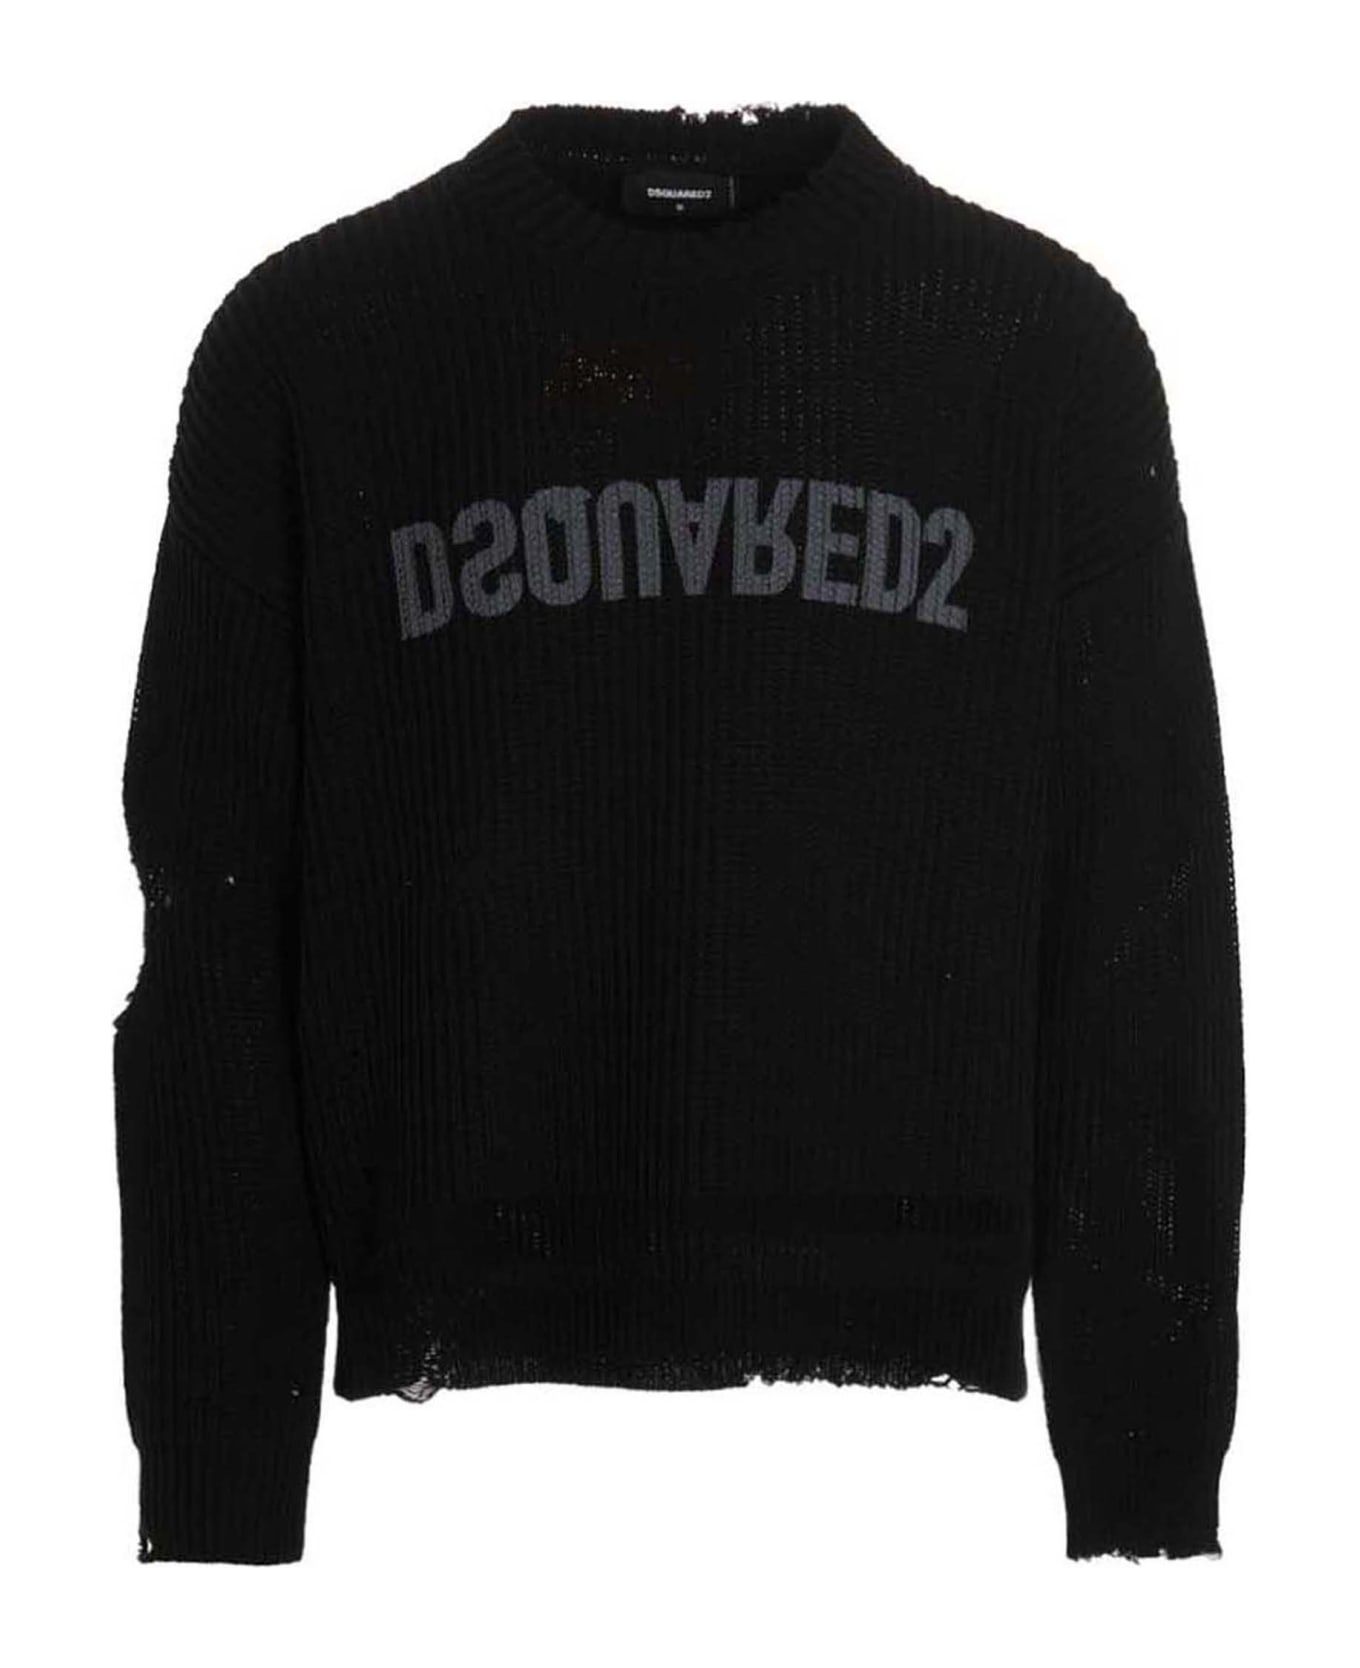 Dsquared2 'd2 Reverse' Sweater - Black  